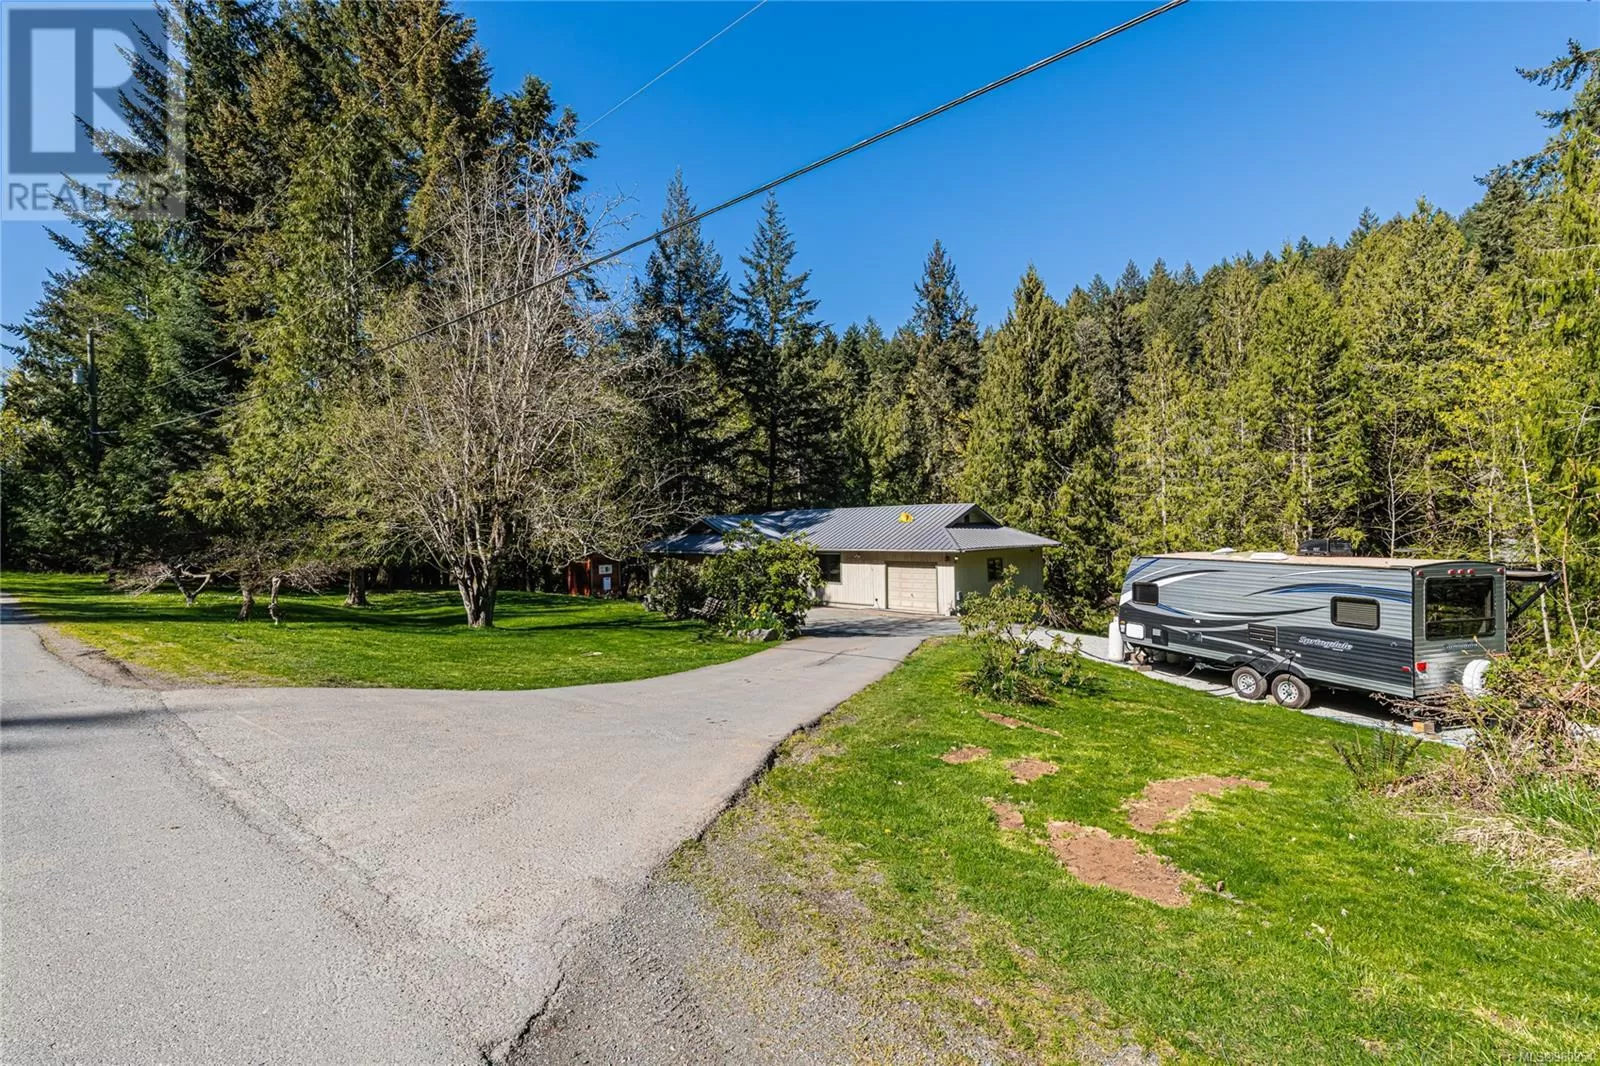 House for rent: 130 Monteith Rd, Salt Spring, British Columbia V8K 1H4